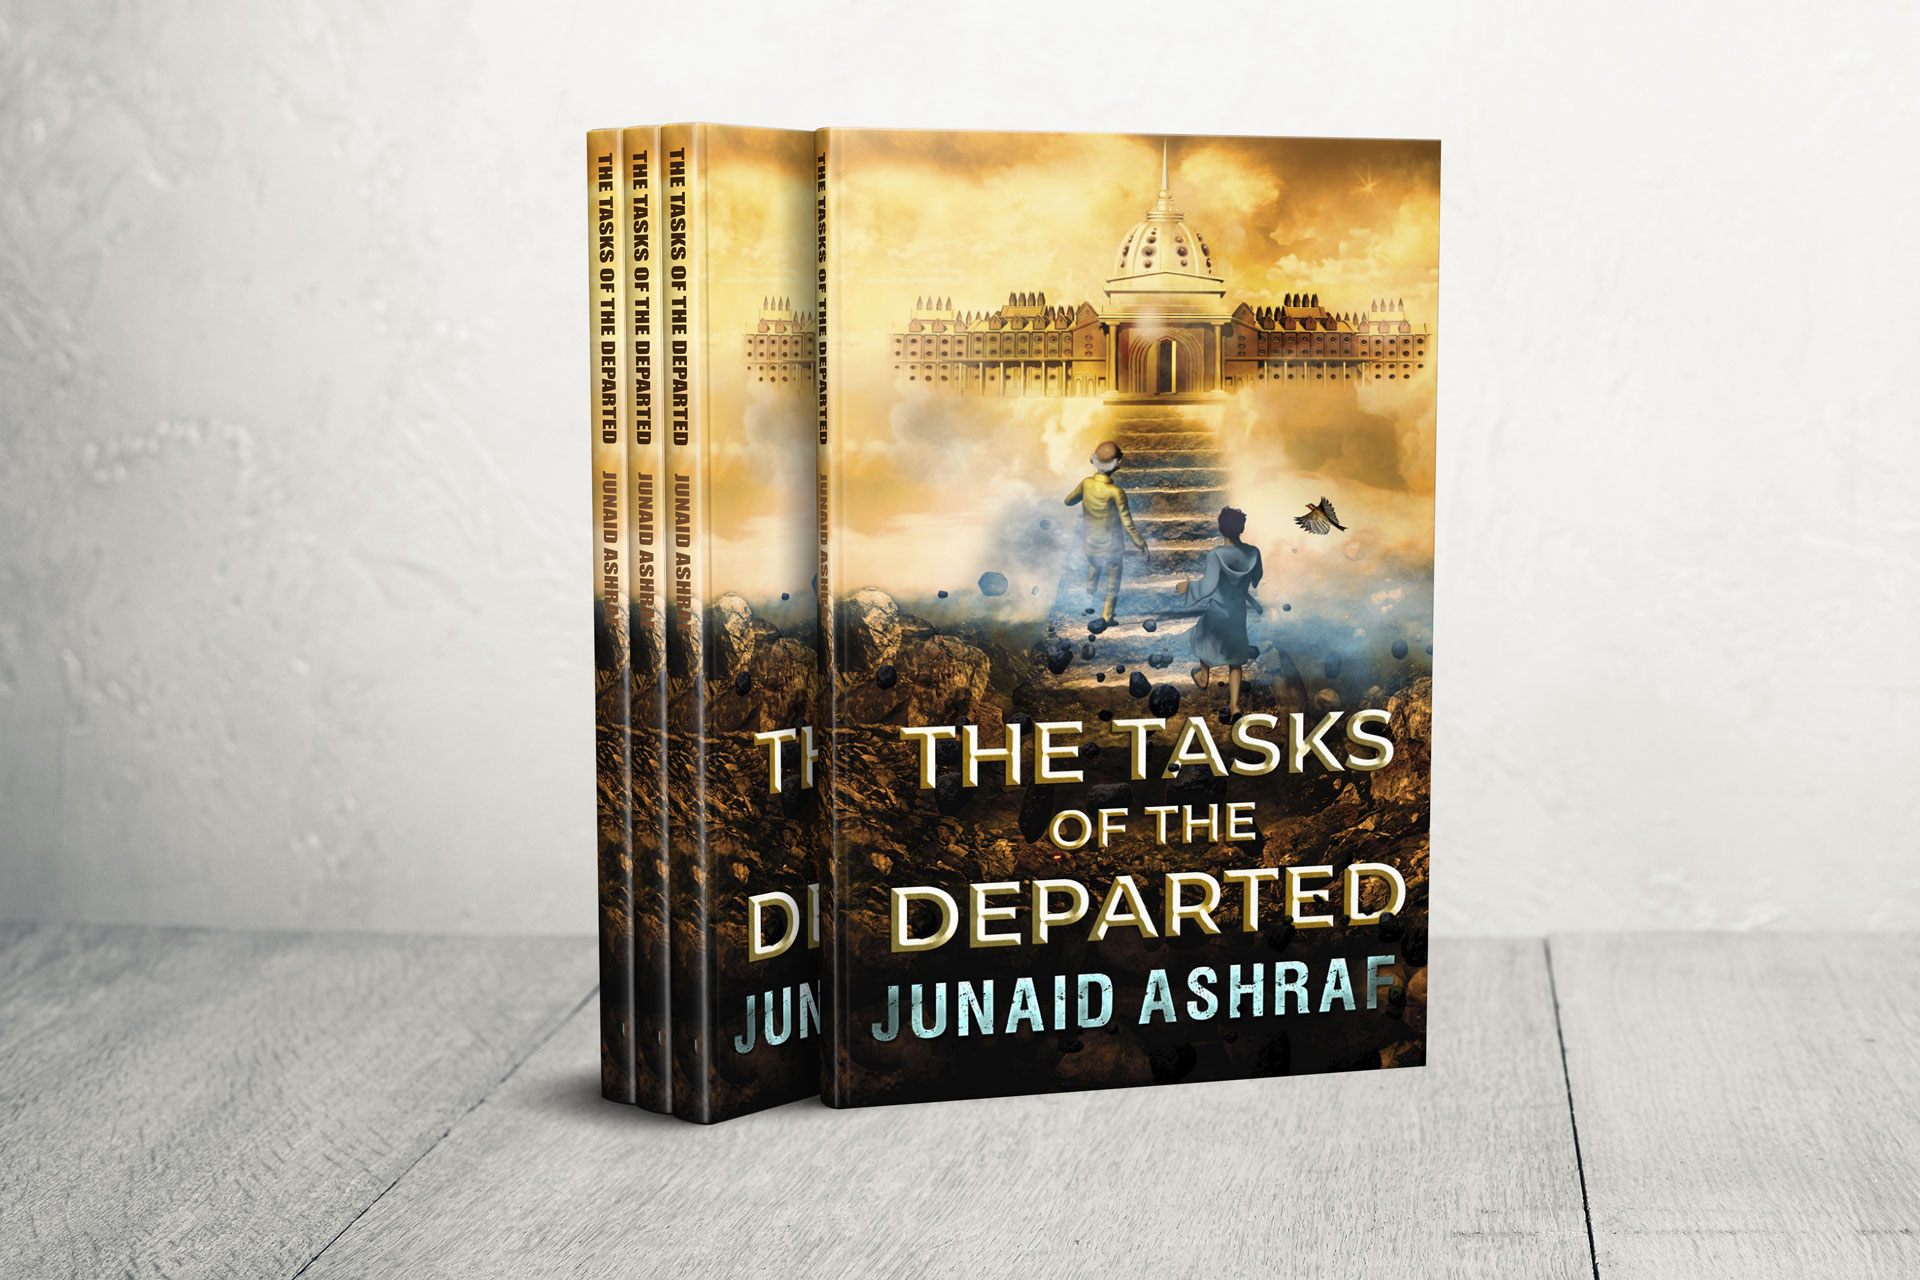 The Tasks of the Departed - Junaid Ashraf